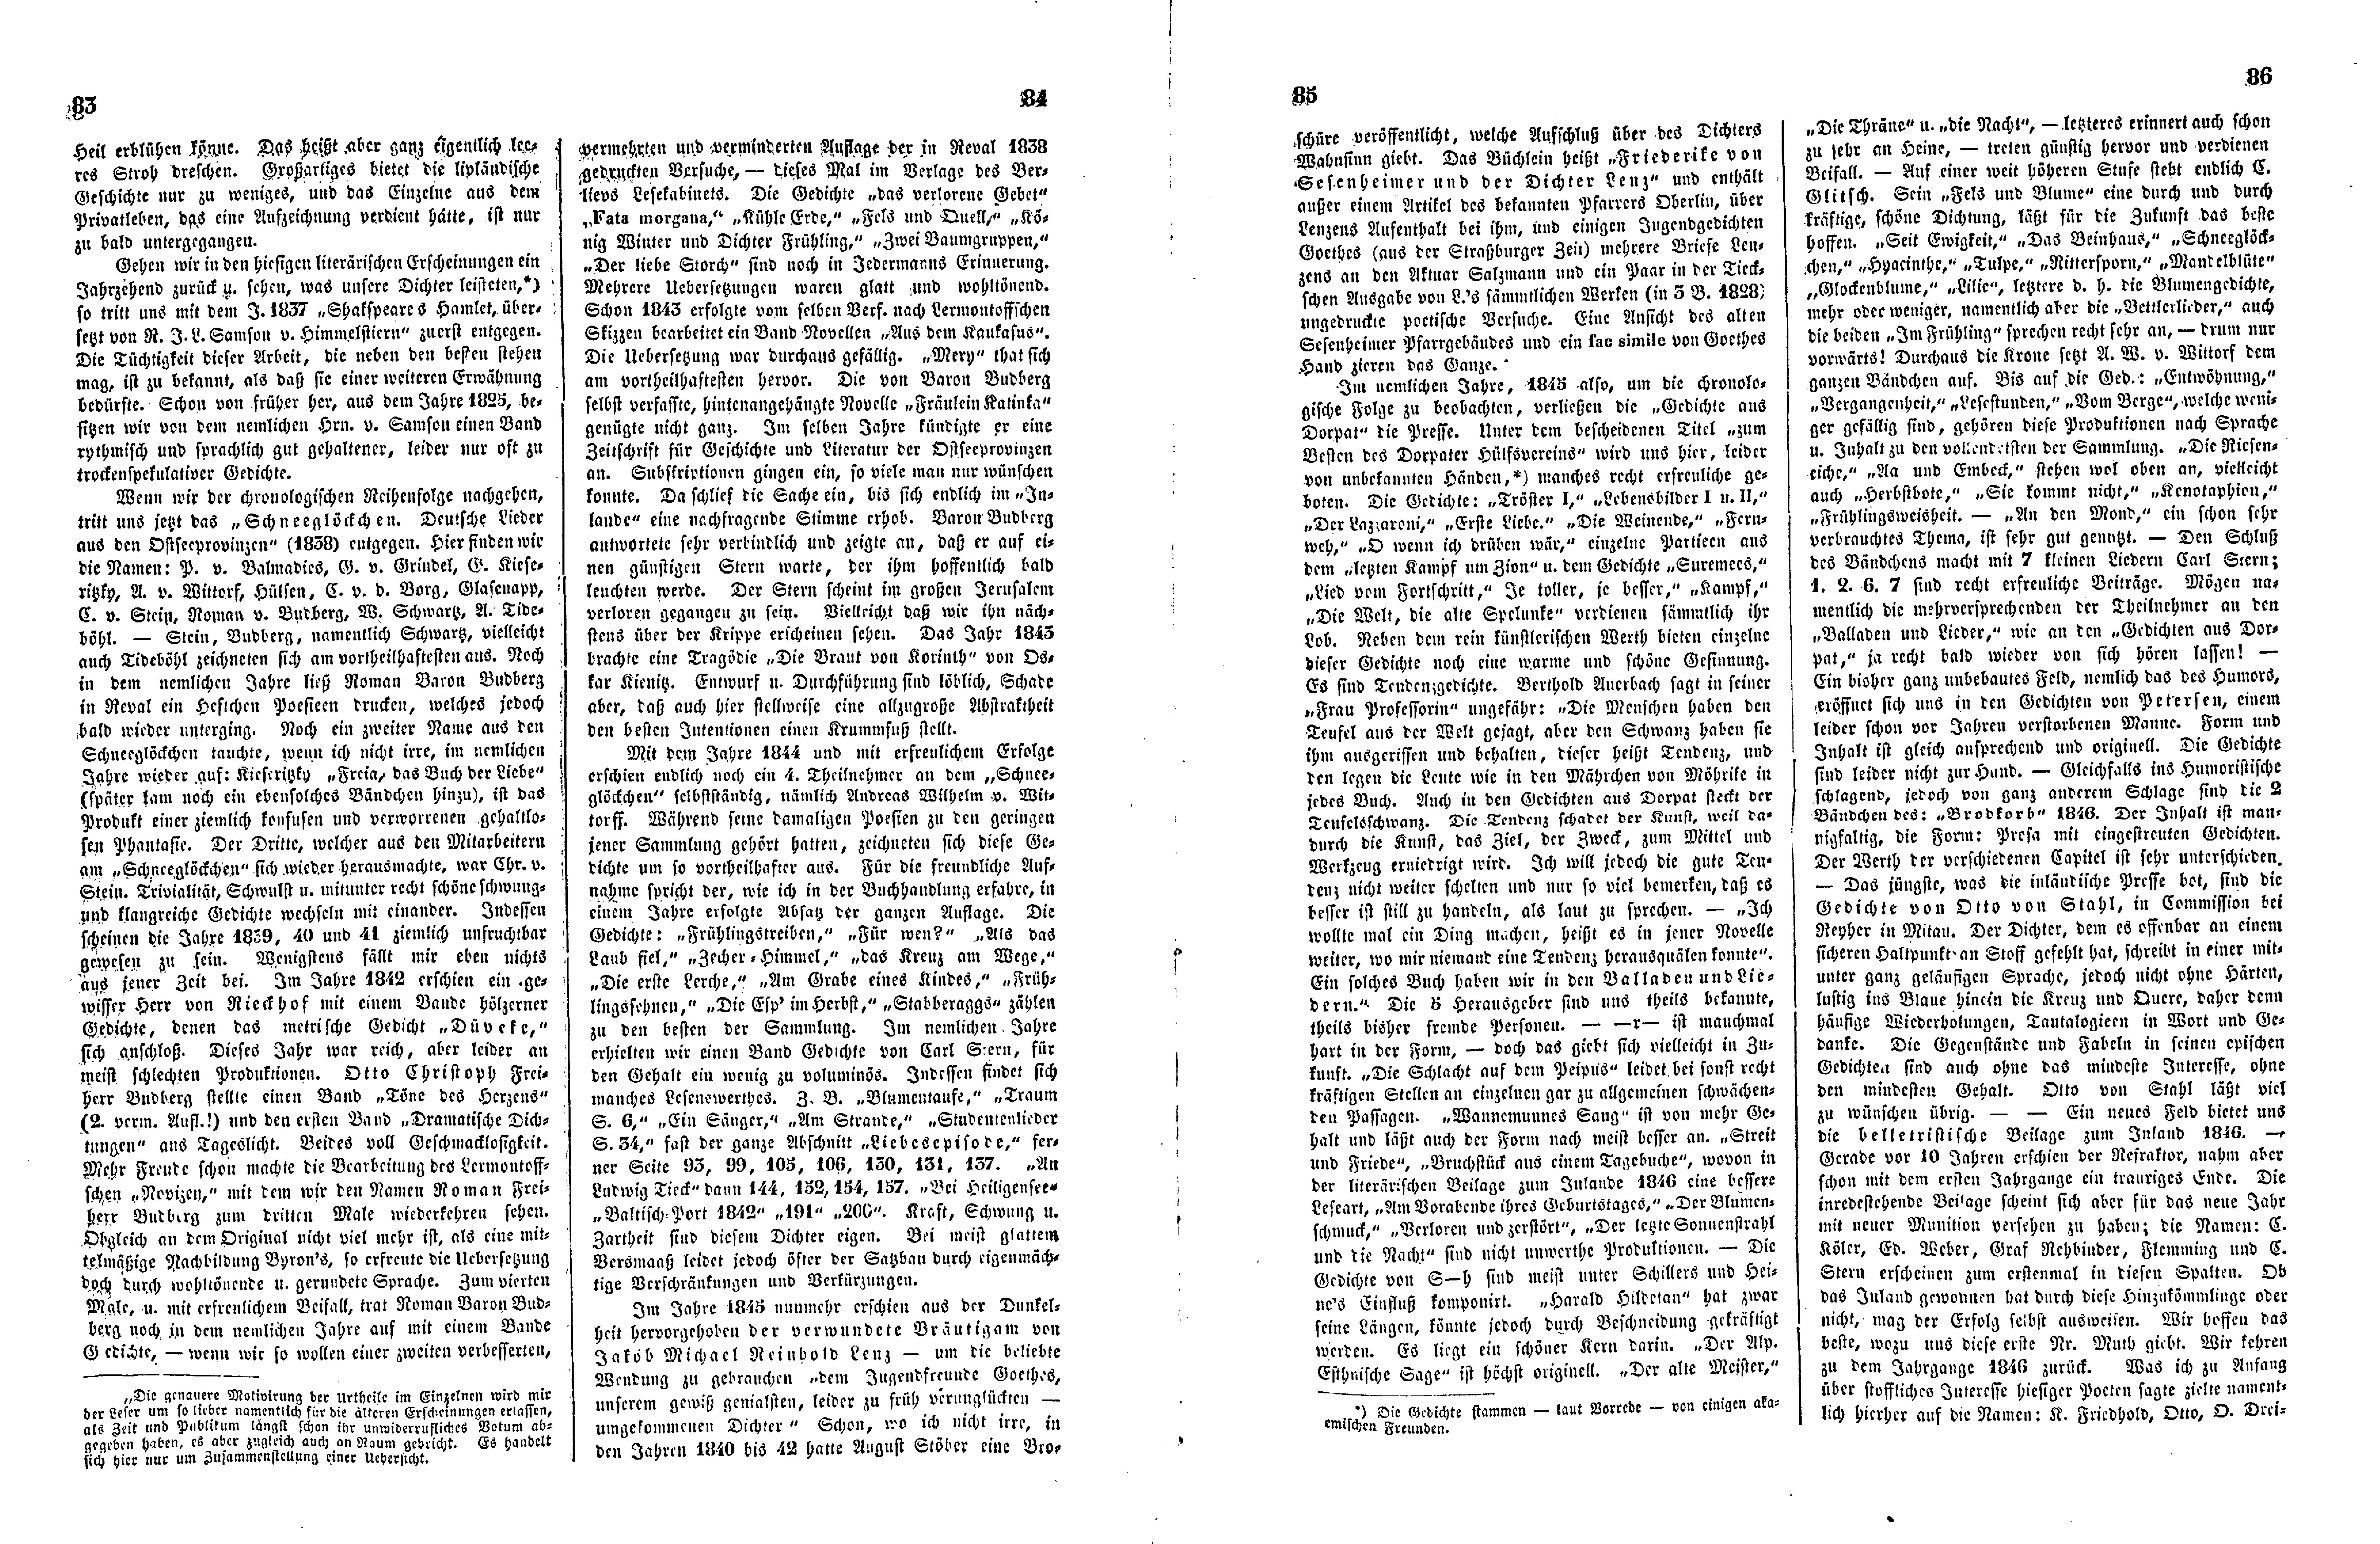 Das Inland [12] (1847) | 26. (83-86) Main body of text